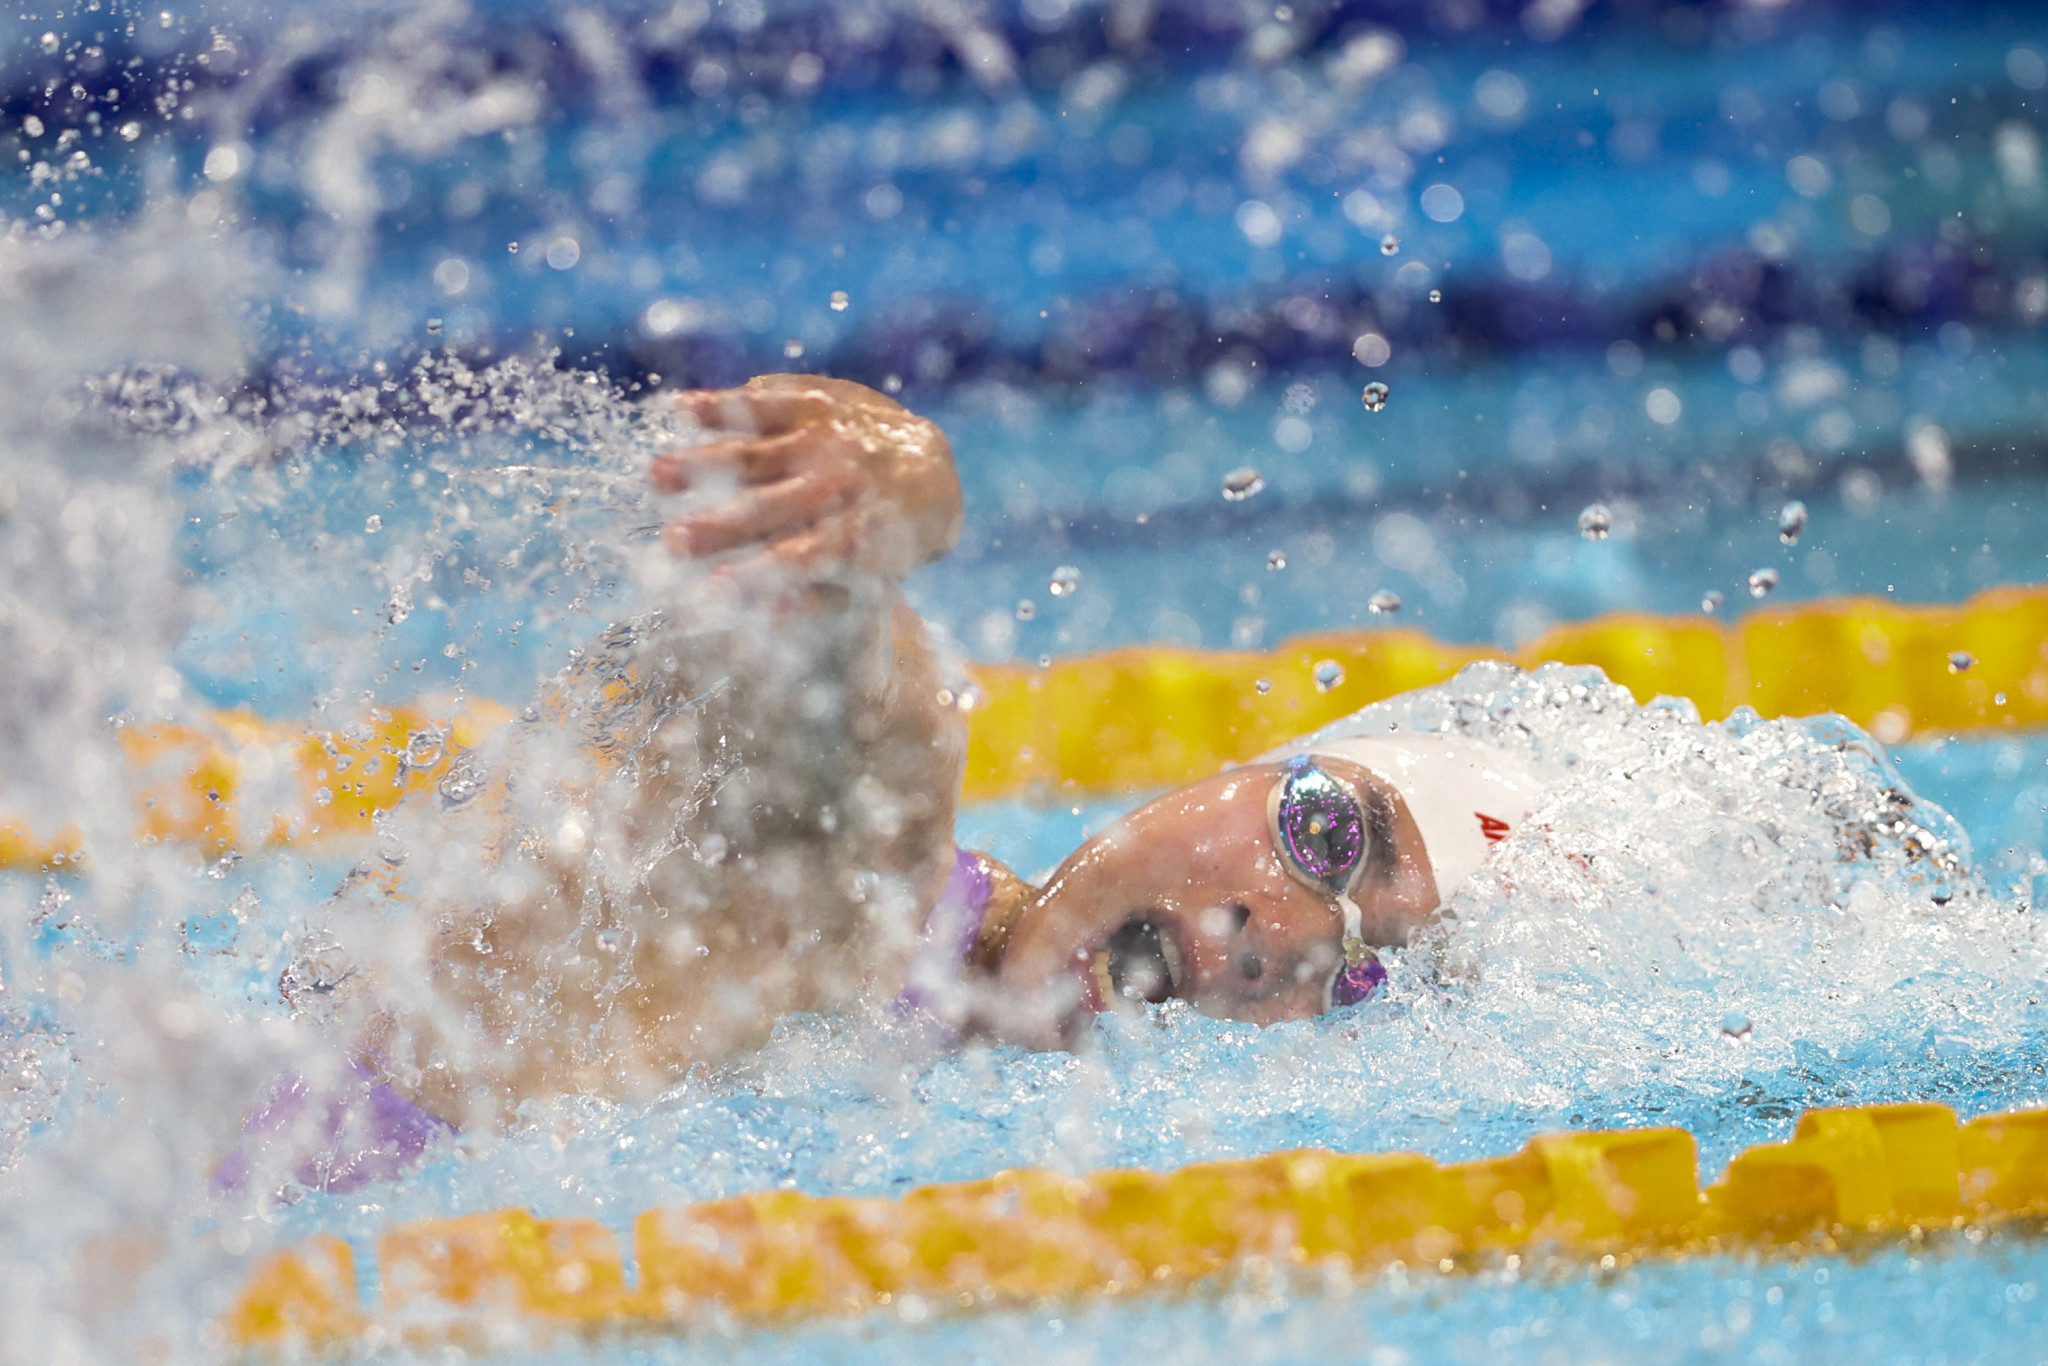 Zhang Yufei on her way to winning women's 50 metres freestyle swimming gold ©Chengdu 2021